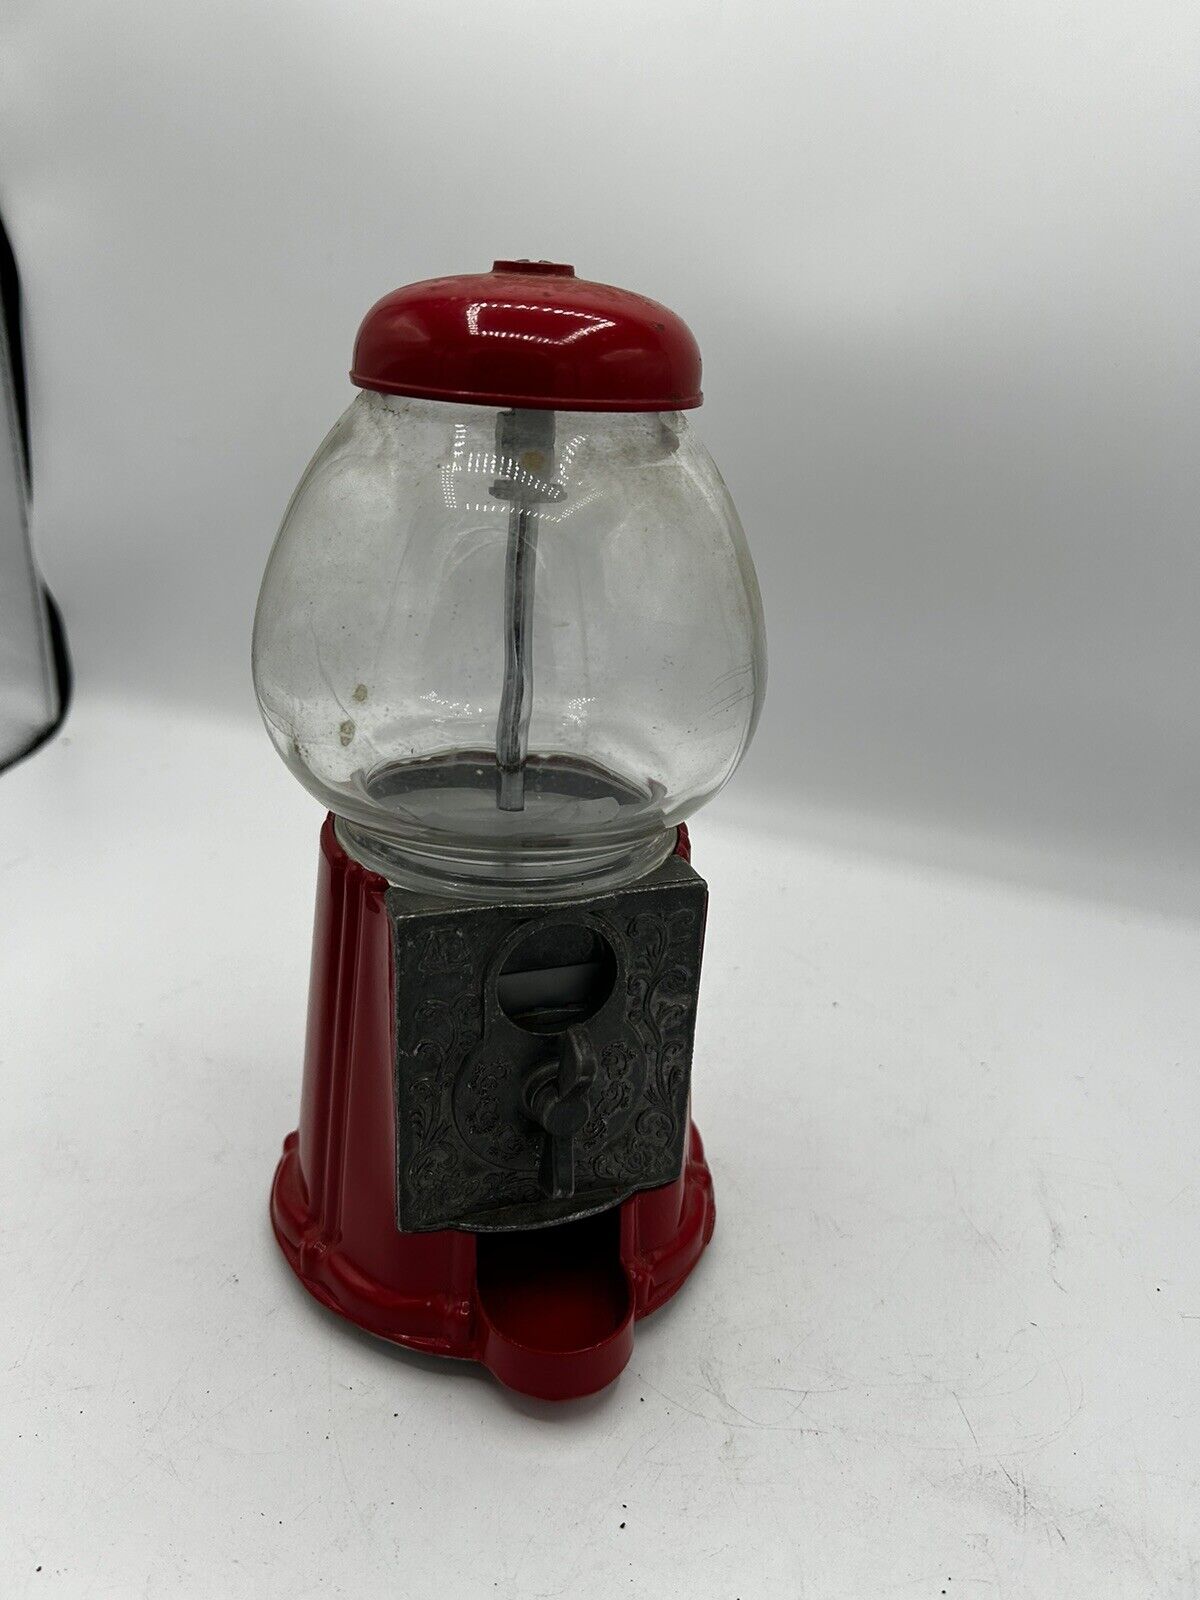 Vintage Red Carousel Bubble Gum Machine Cast Metal Glass Globe